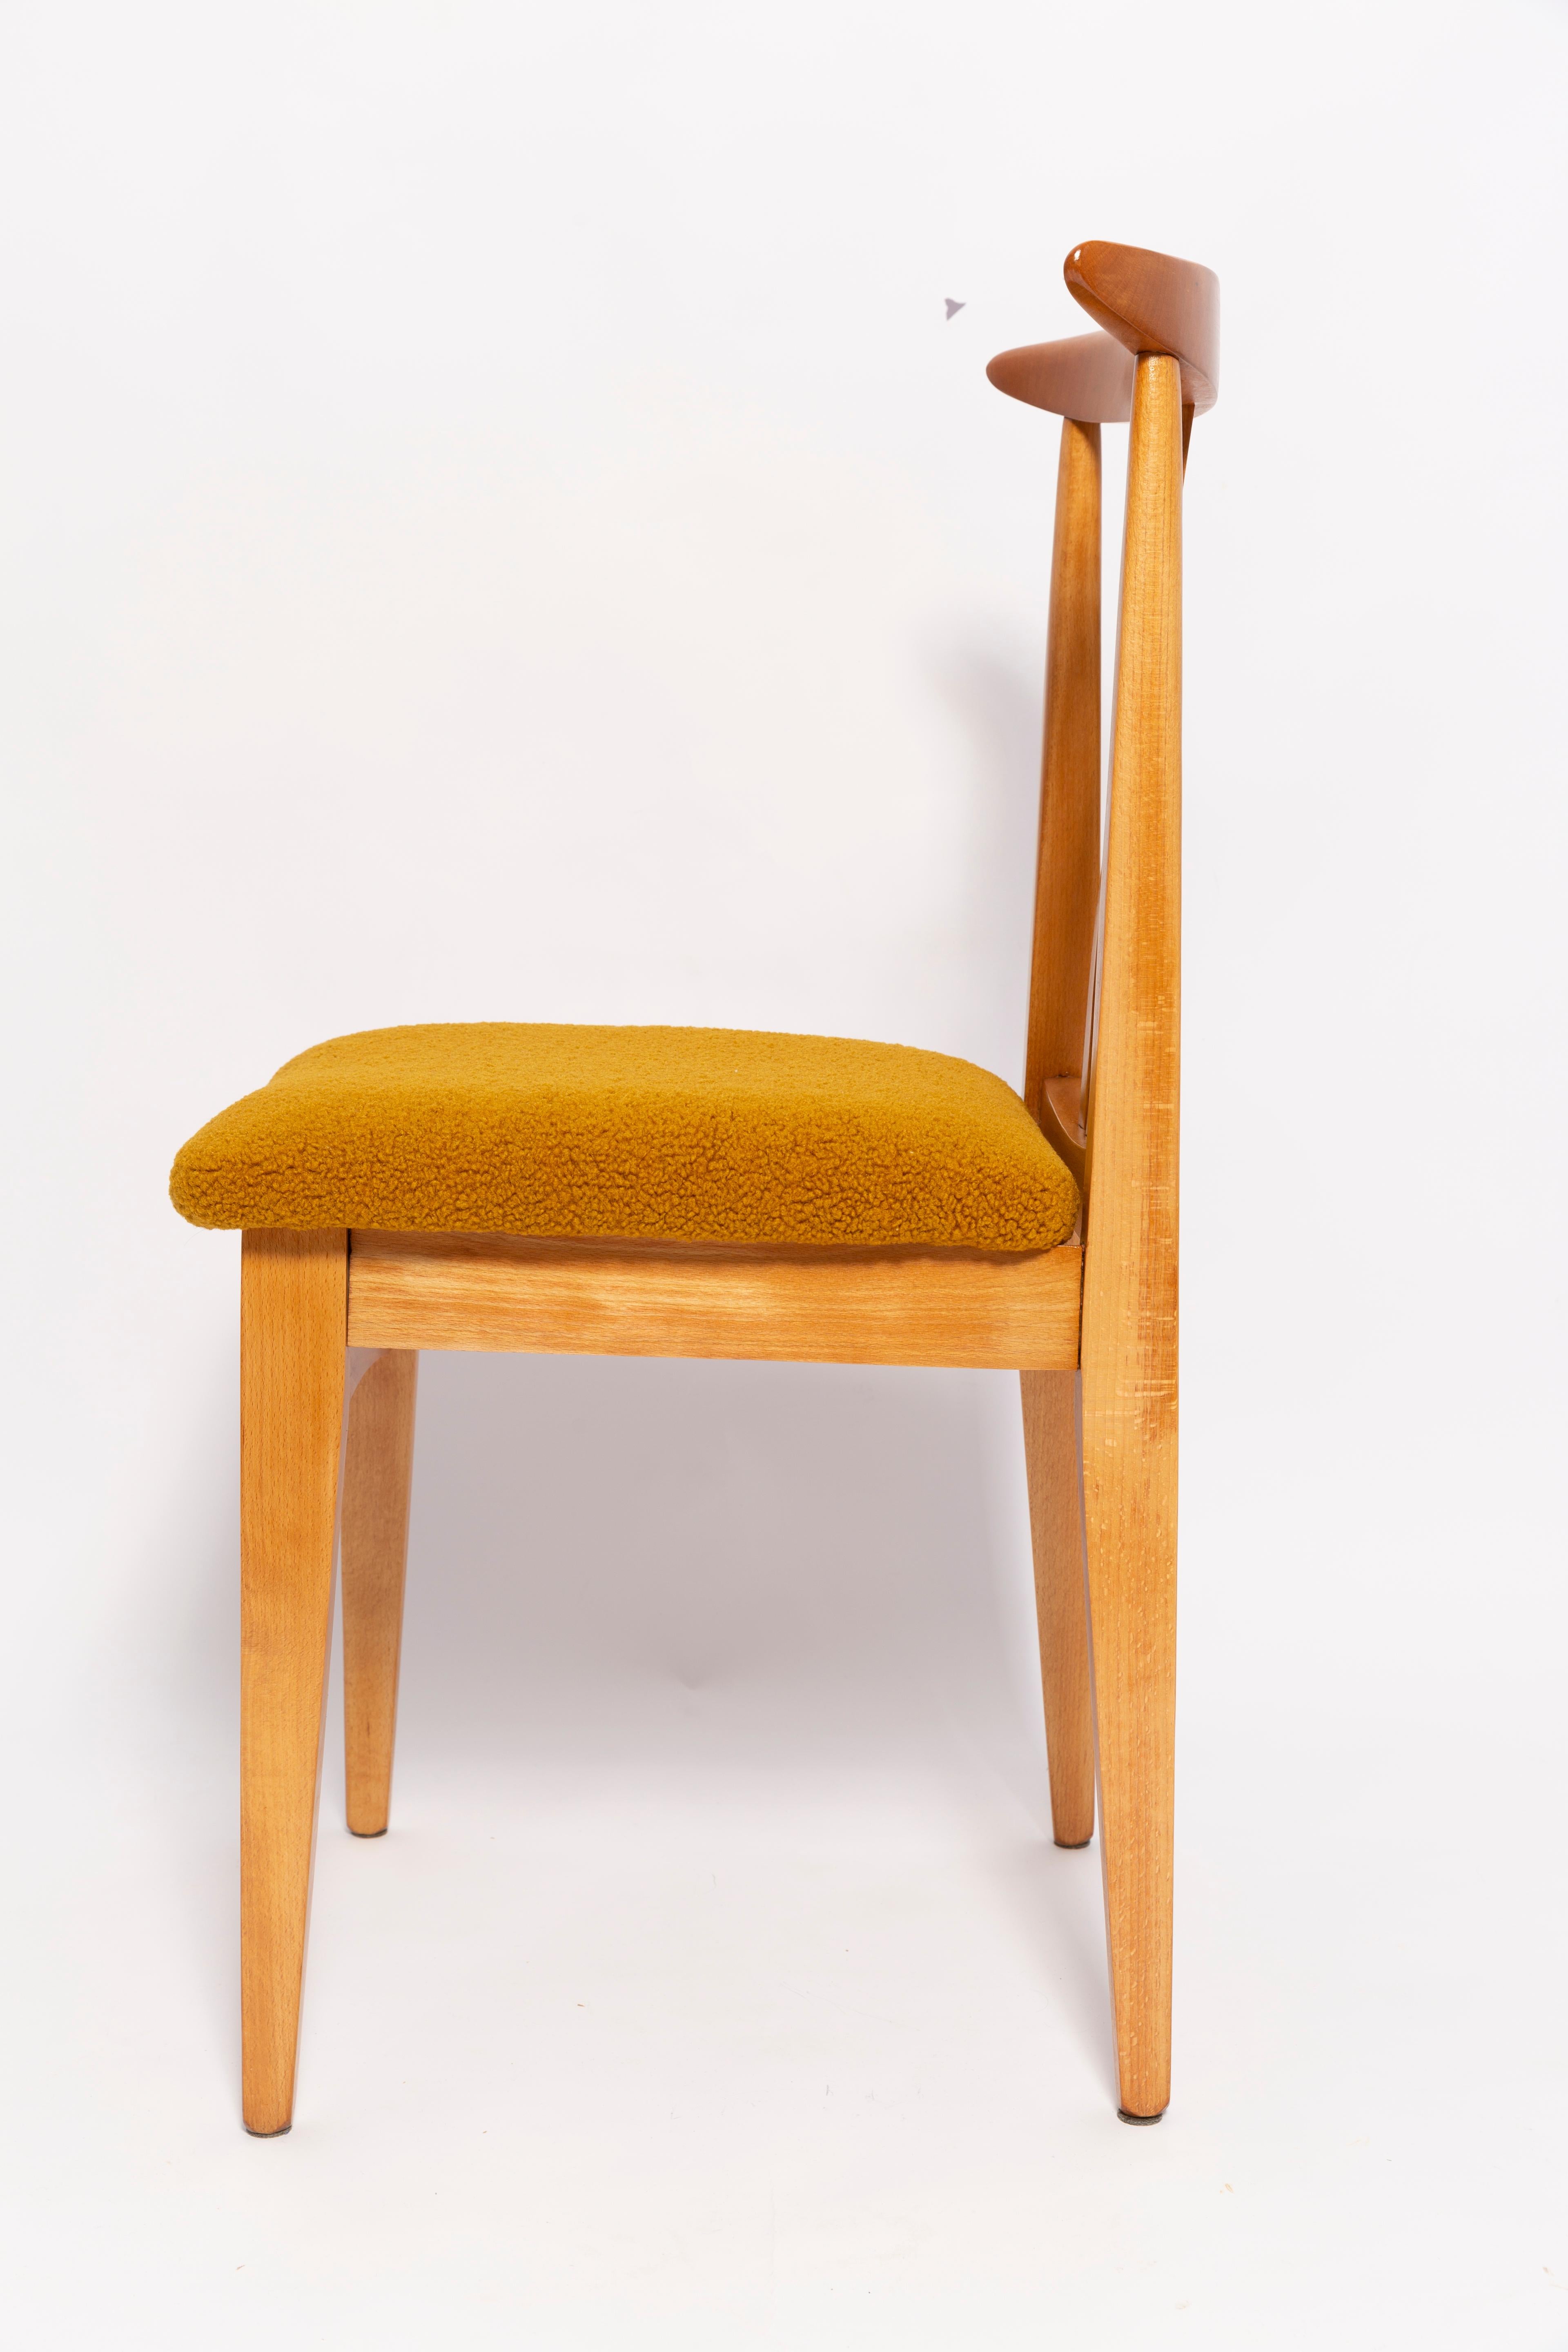 Bouclé Eight Mid-Century Ochre Boucle Chairs, Light Wood, M. Zielinski, Europe, 1960s For Sale